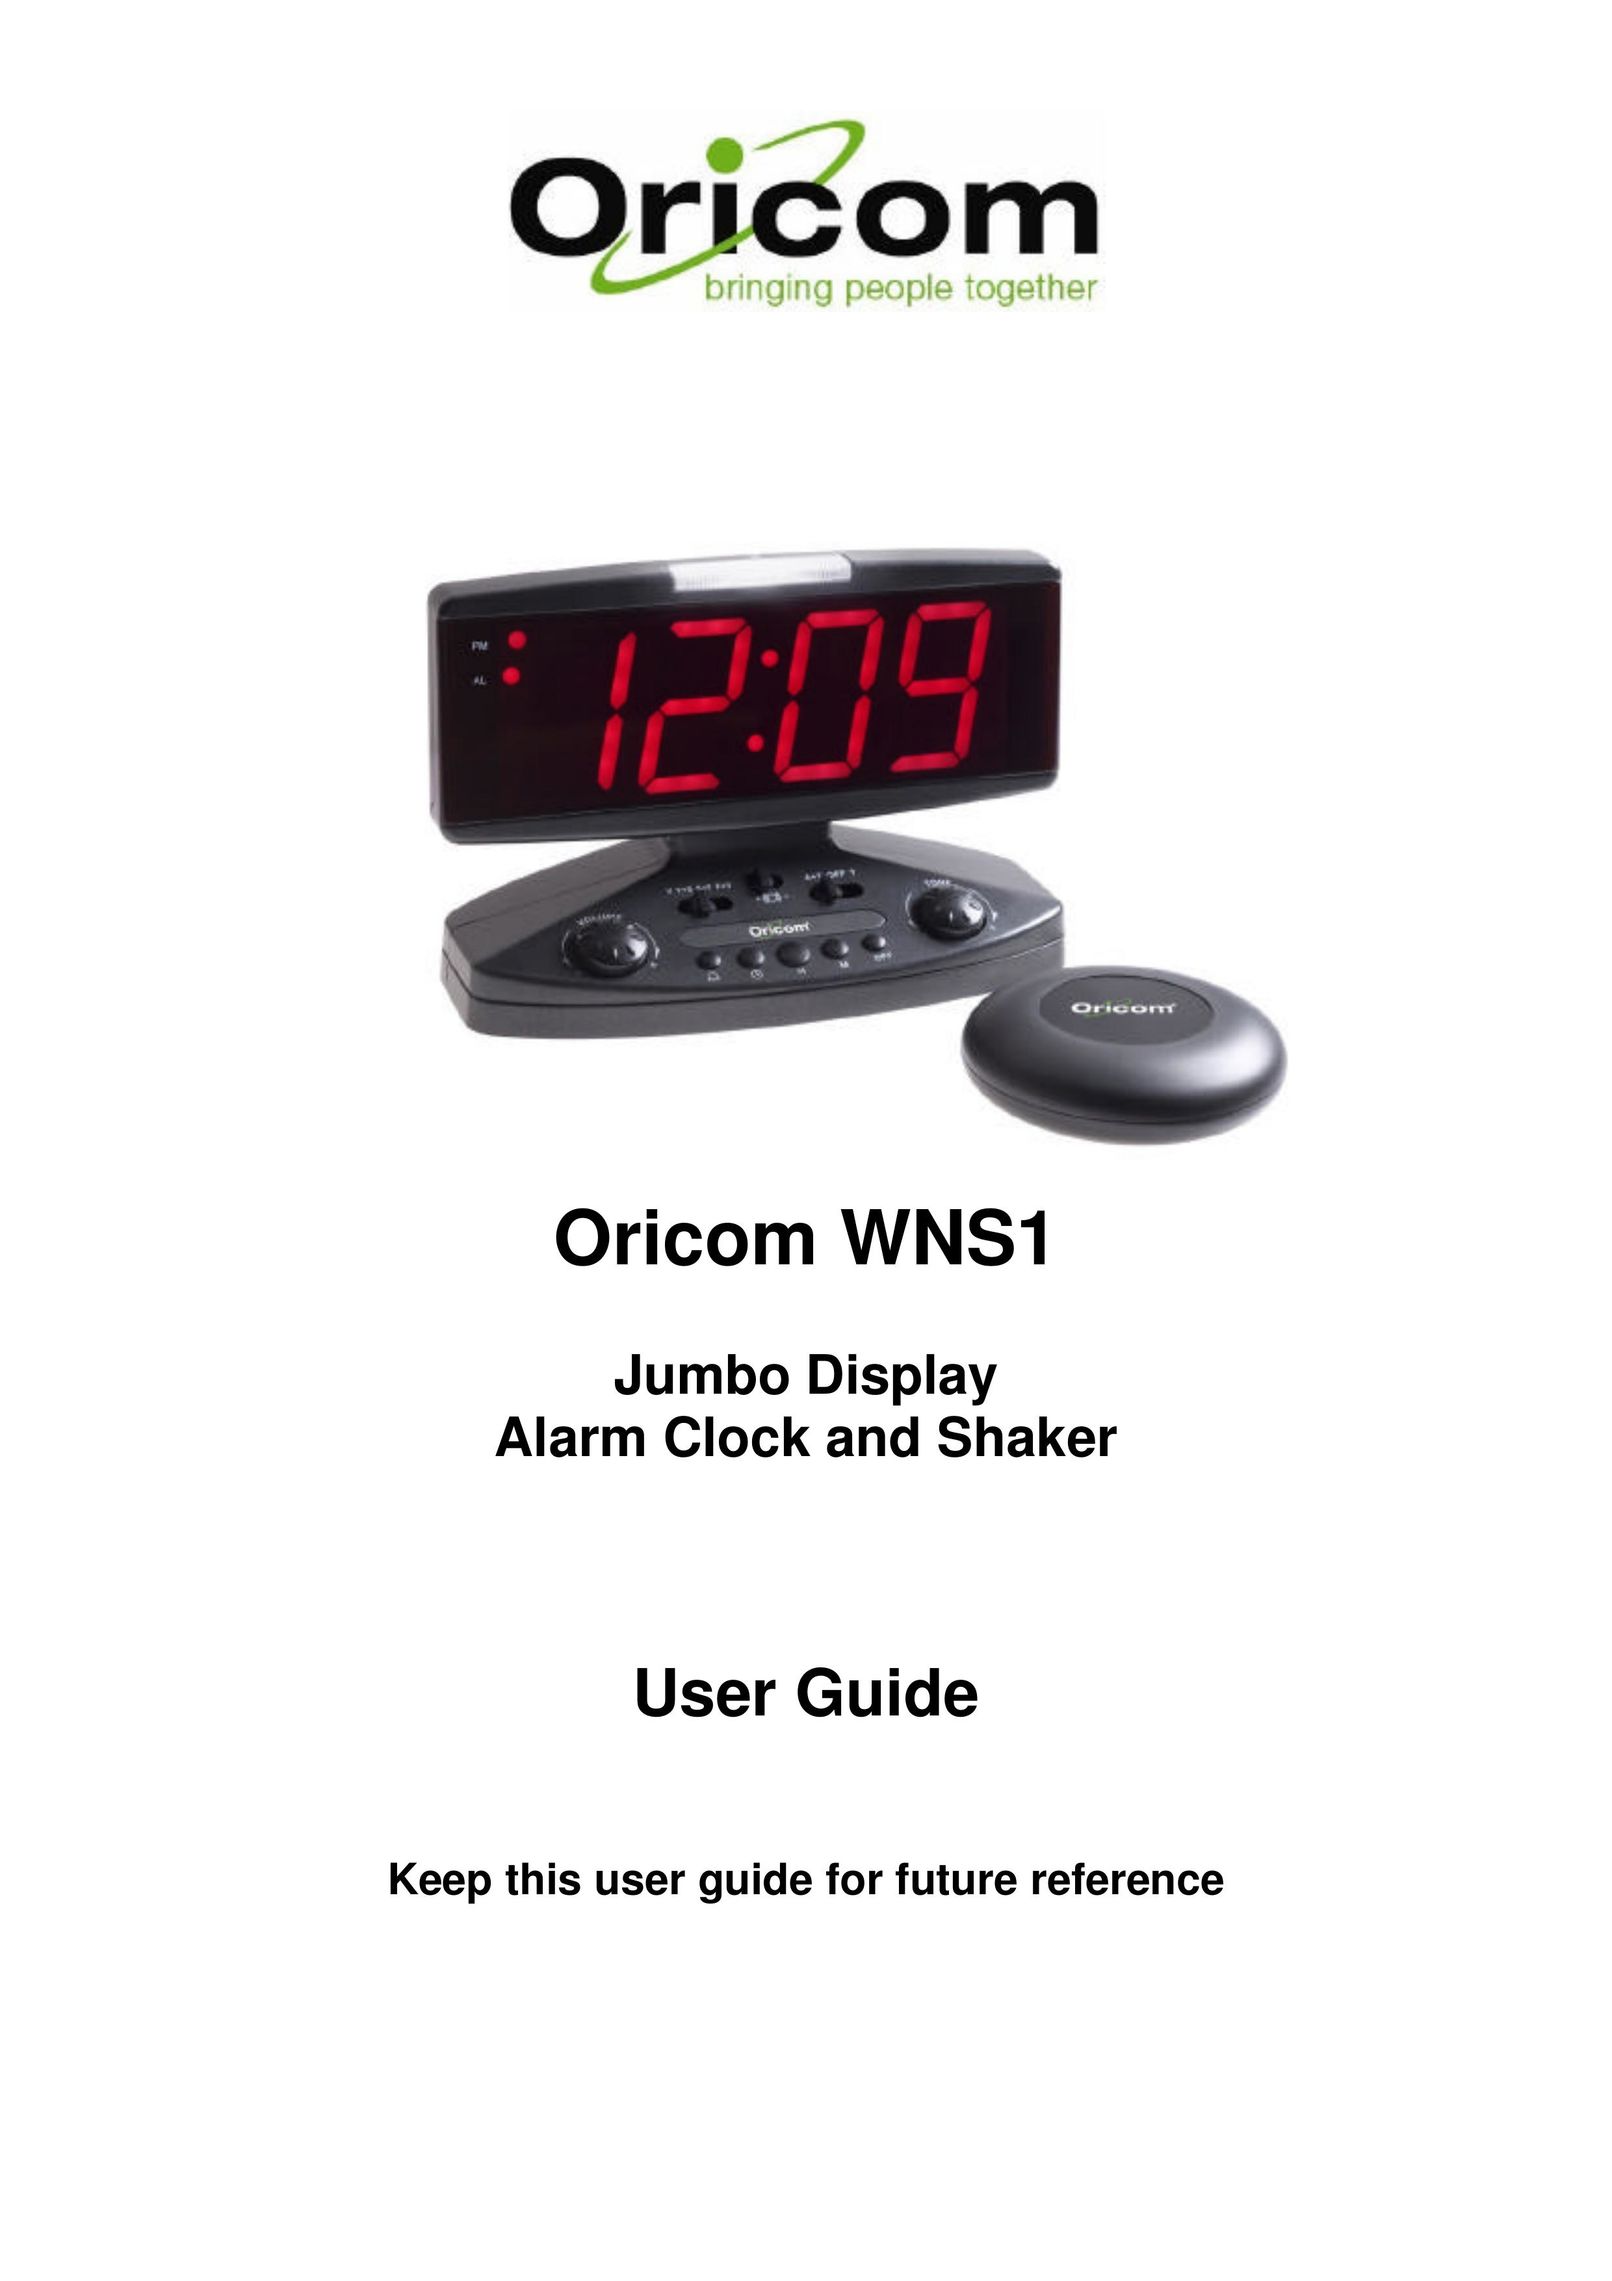 Oricom WNS1 Clock User Manual